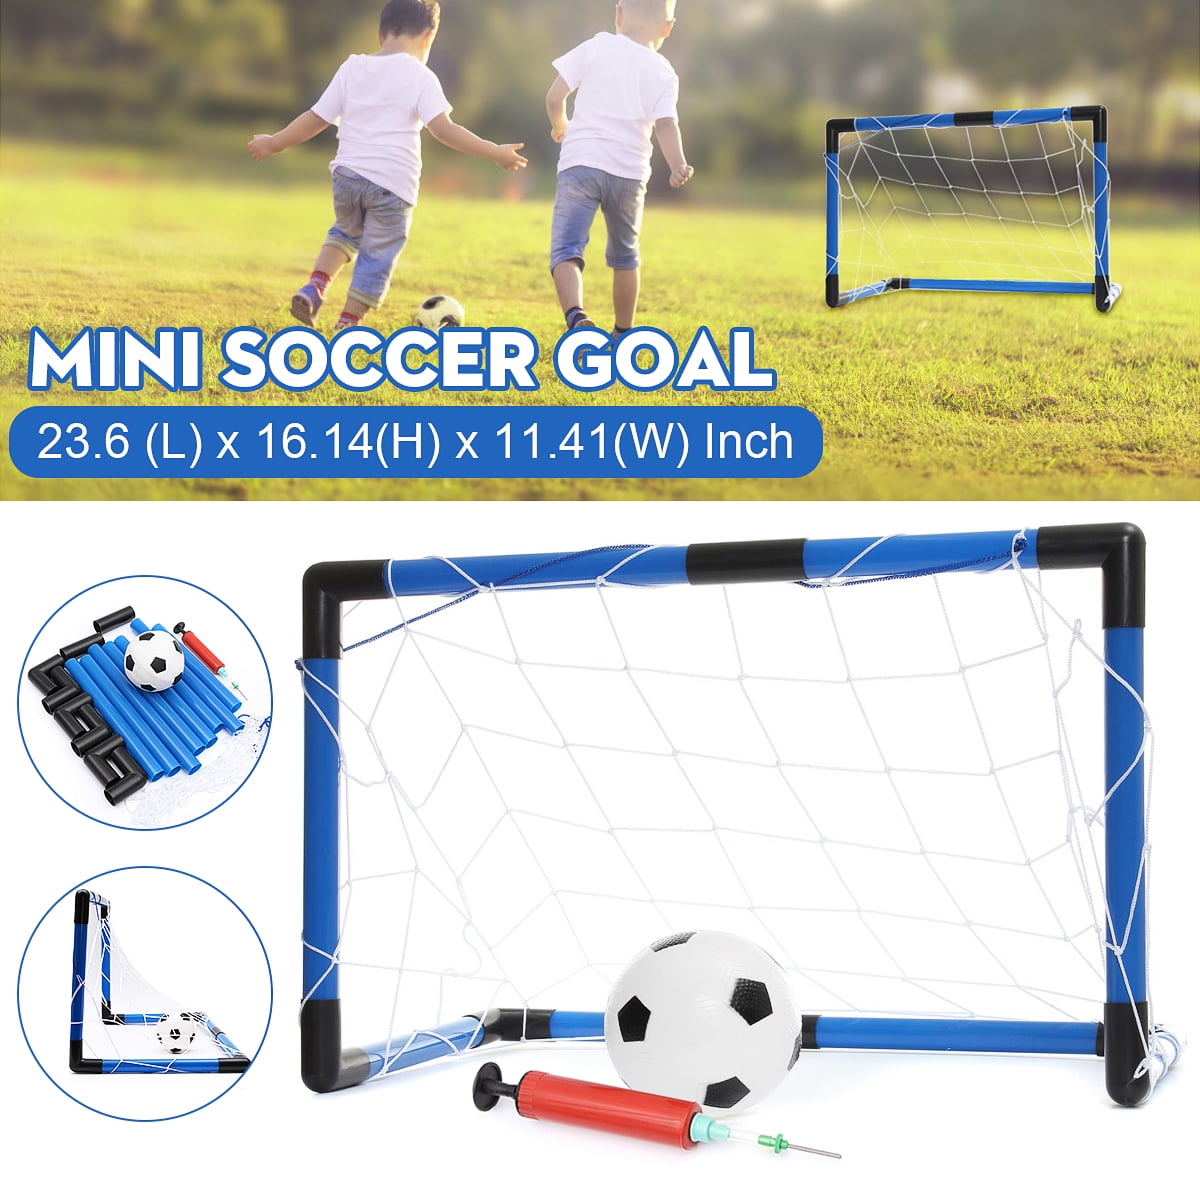 Dreamon Set of 2 Kids Football Goal Post Net with Ball Pump Indoor Outdoor 